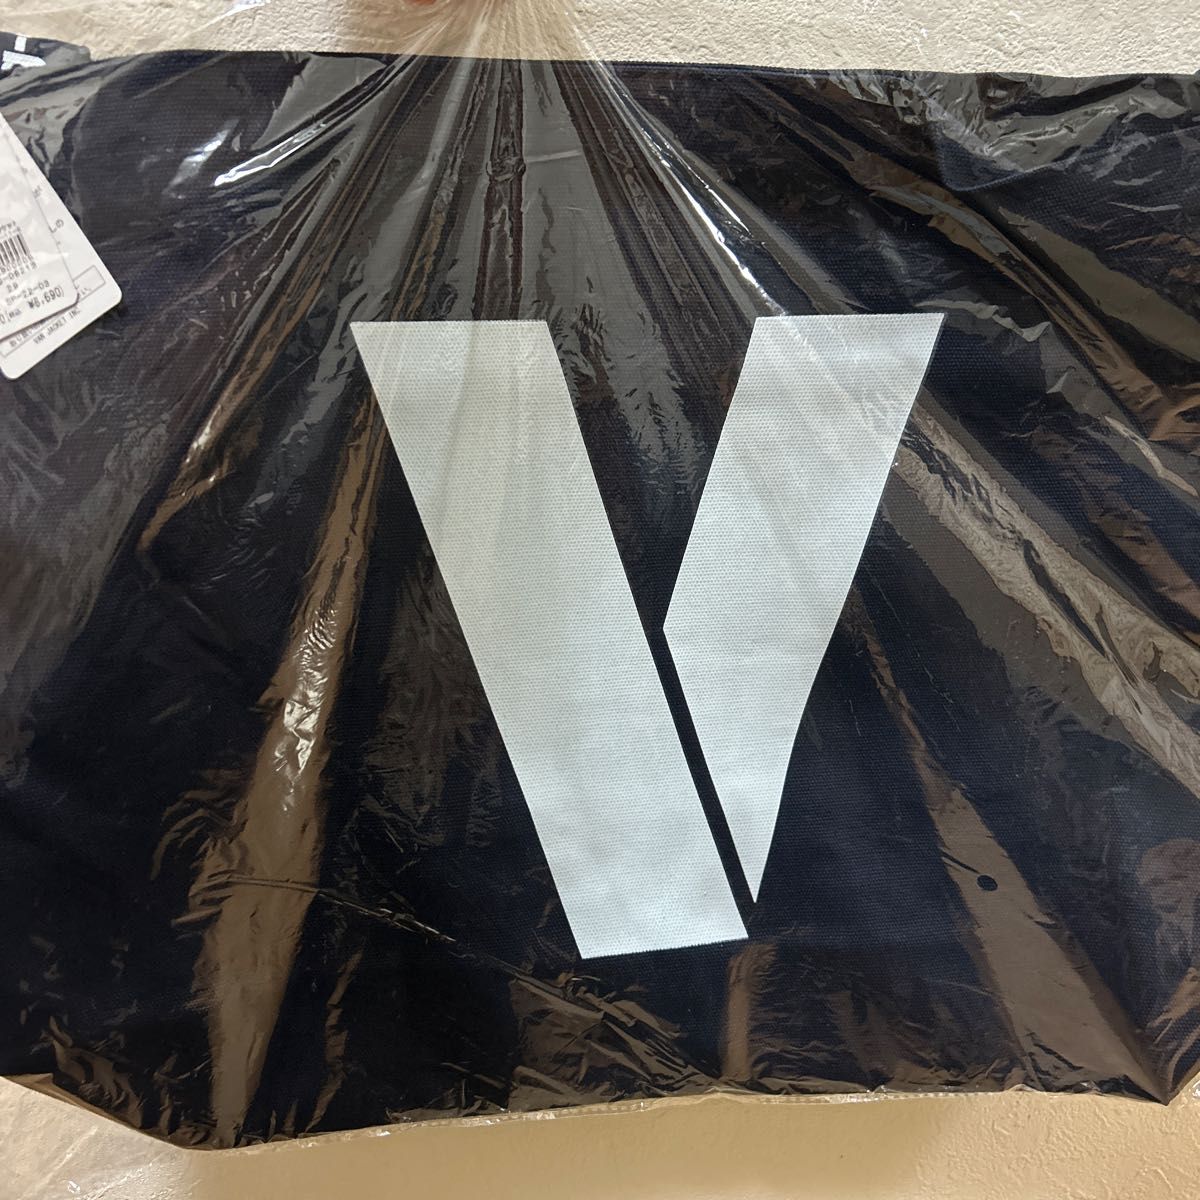 VAN ショルダーバッグ　ヴァンジャケット　大容量　ロゴデザイン　通学　シンプル　キャンバスバッグ　ラスト一点